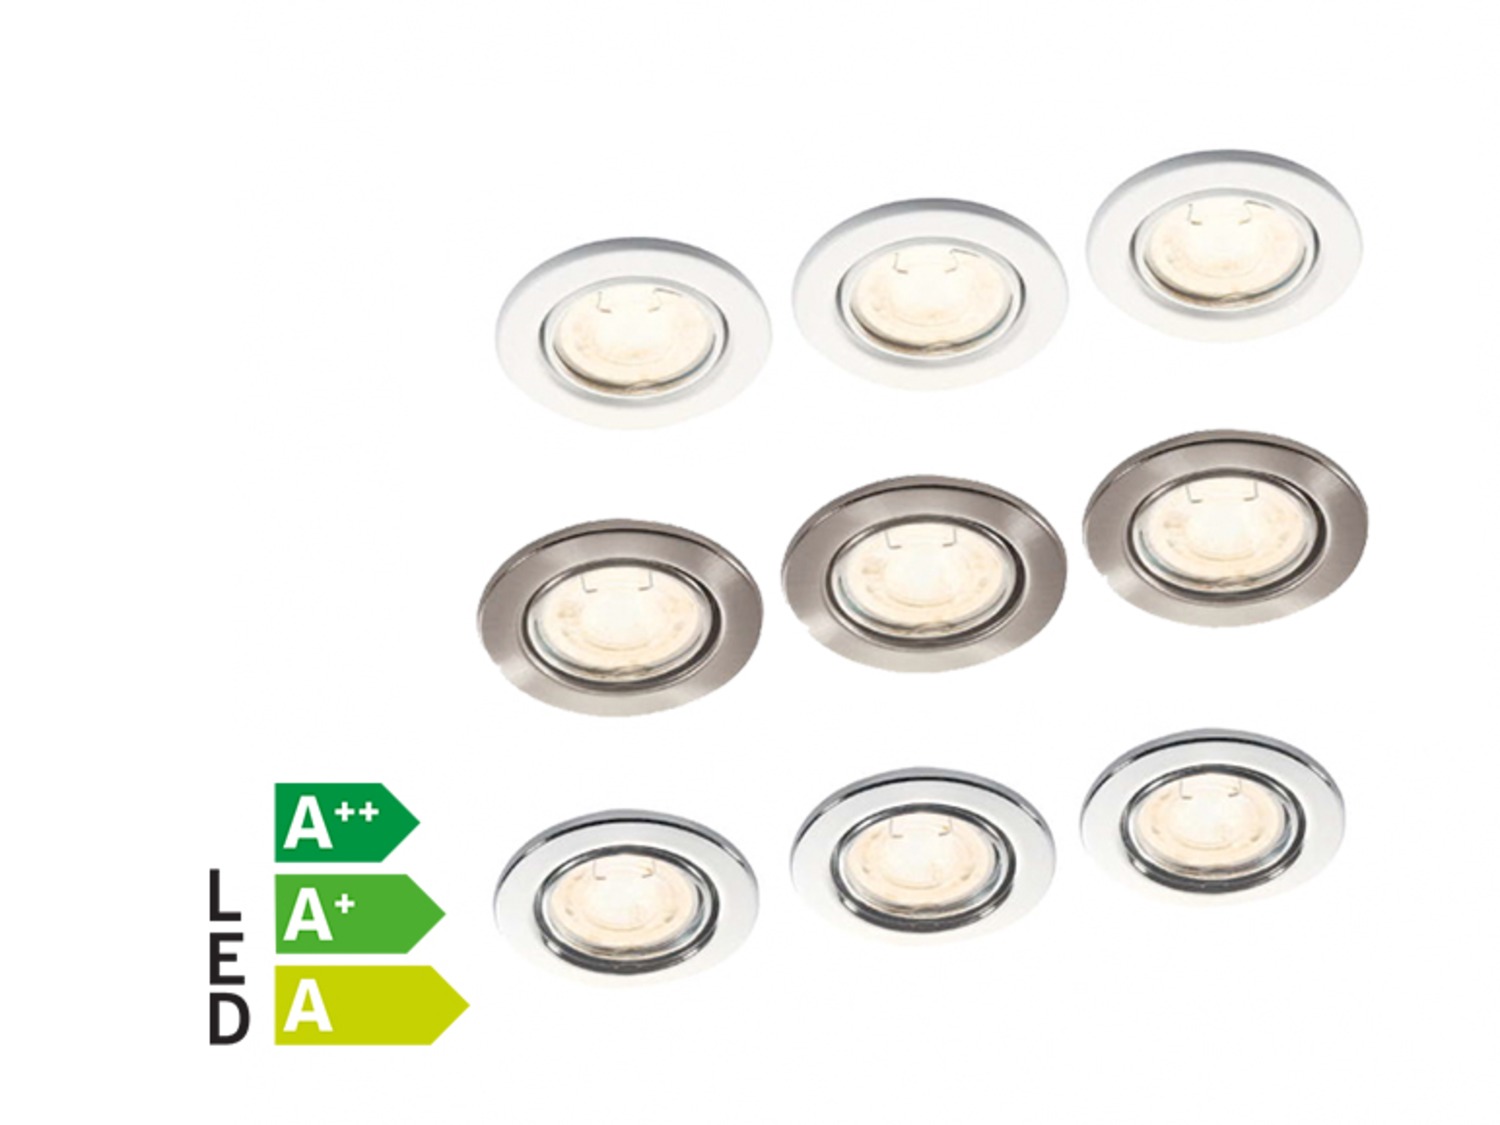 Meer Bemiddelen oorlog LIVARNO LUX 3-delige LED inbouwspot online kopen | LIDL